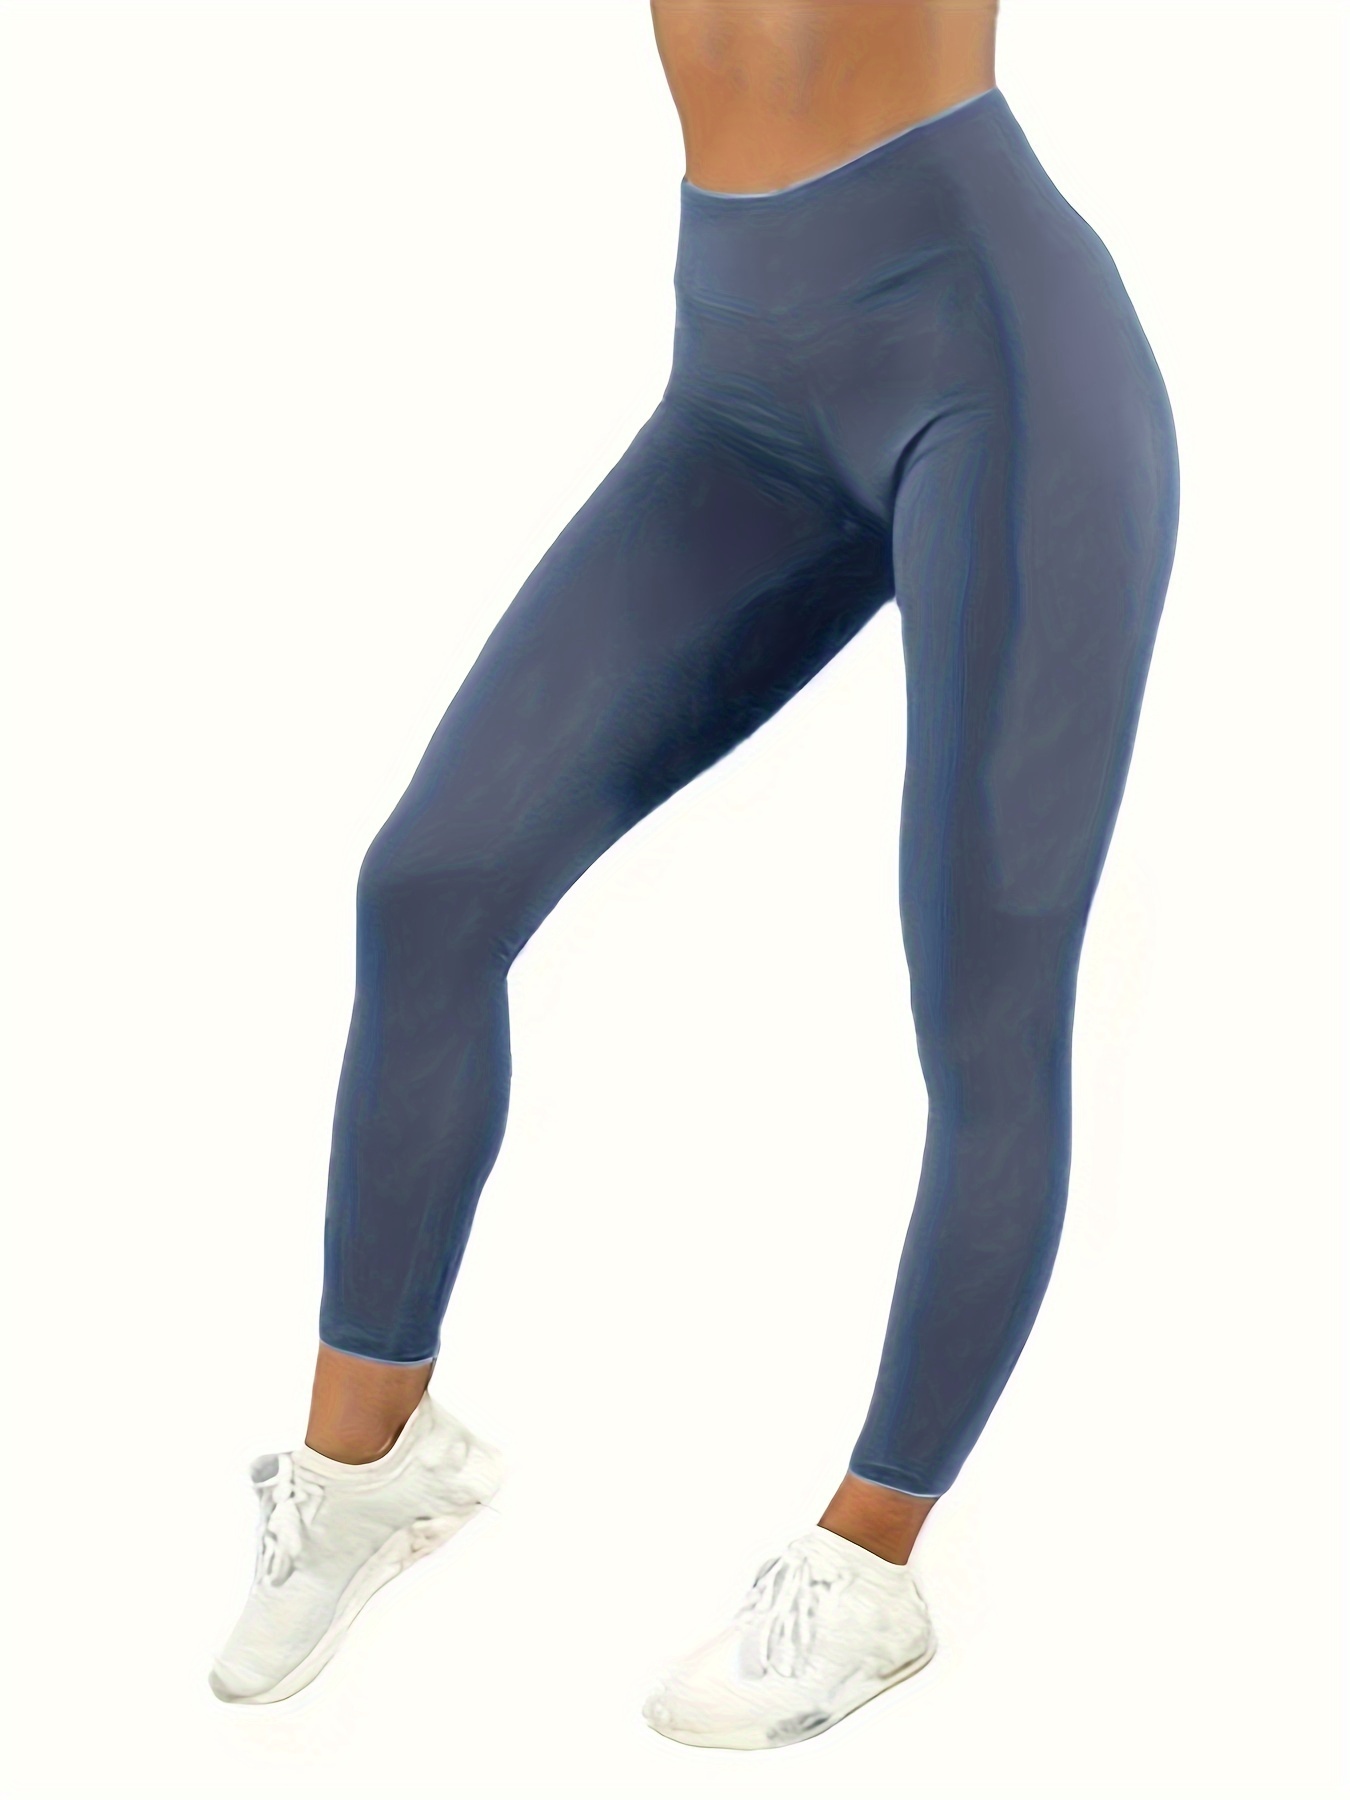  FULLSOFT Womens High Waist Yoga Pants Cutout Ripped Tummy  Control Workout Running Yoga Skinny LeggingsNavy Blue